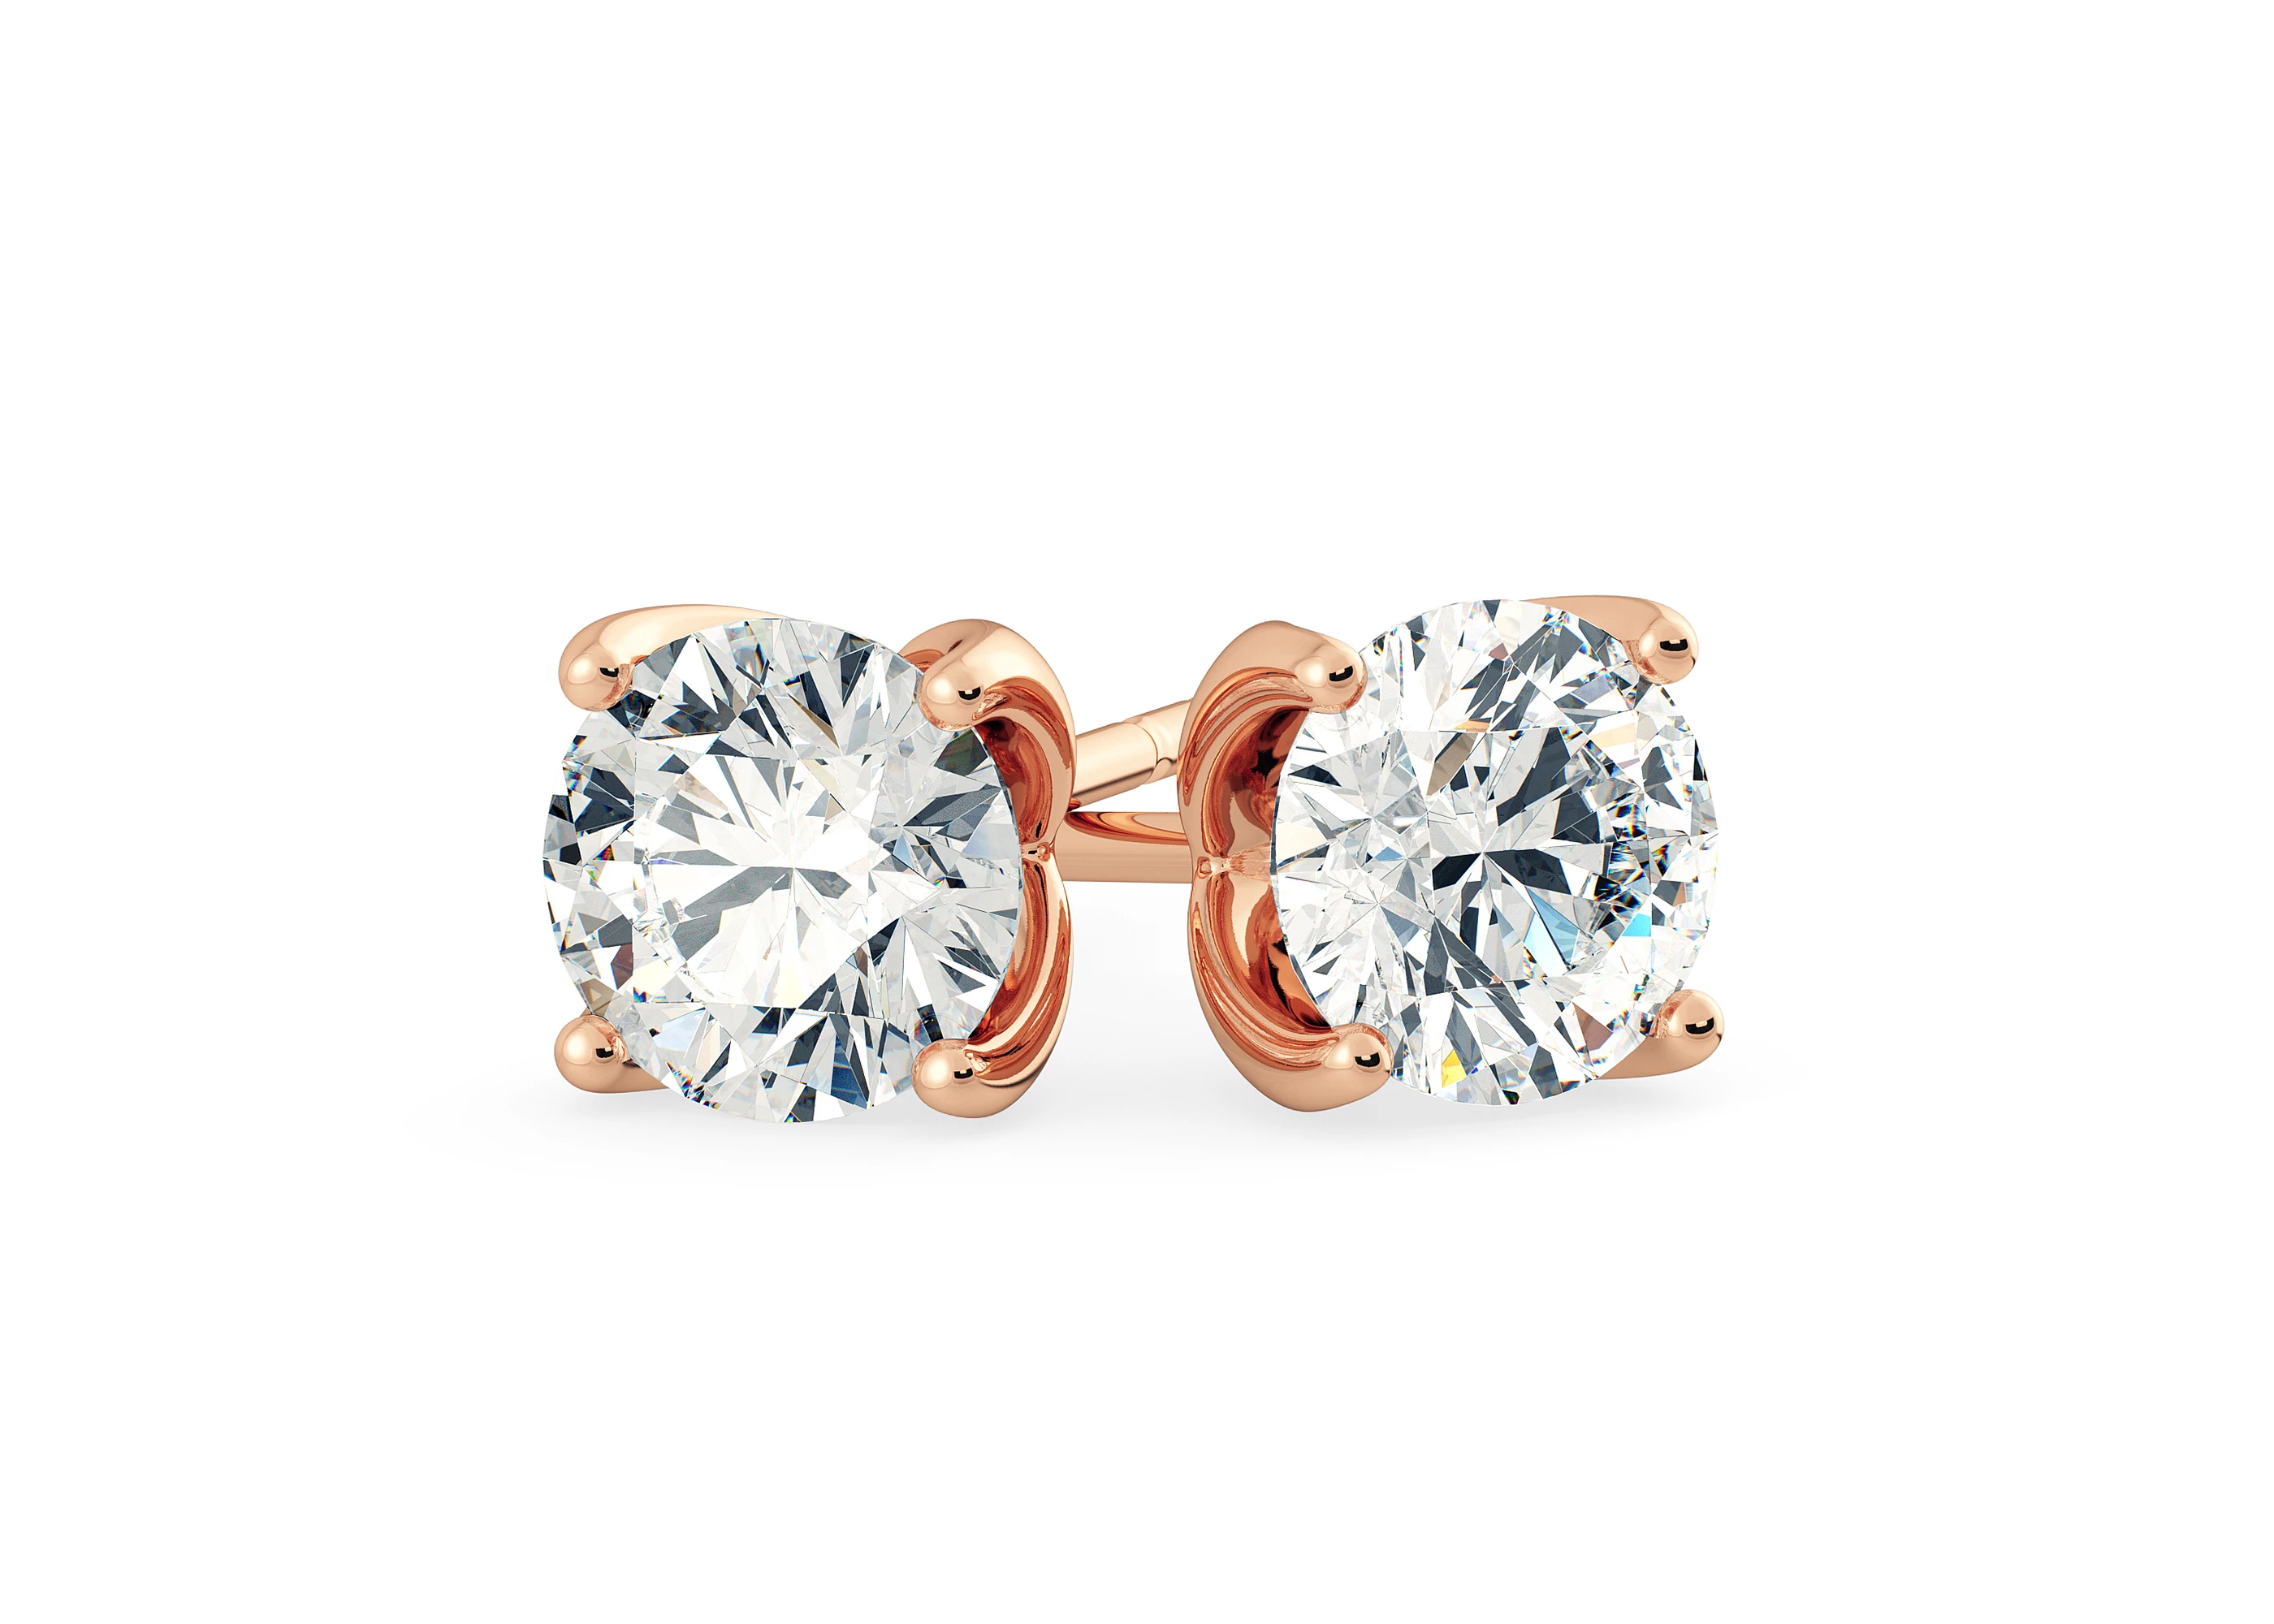 Mirabelle Round Brilliant Diamond Stud Earrings in 18K Rose Gold with Screw Backs